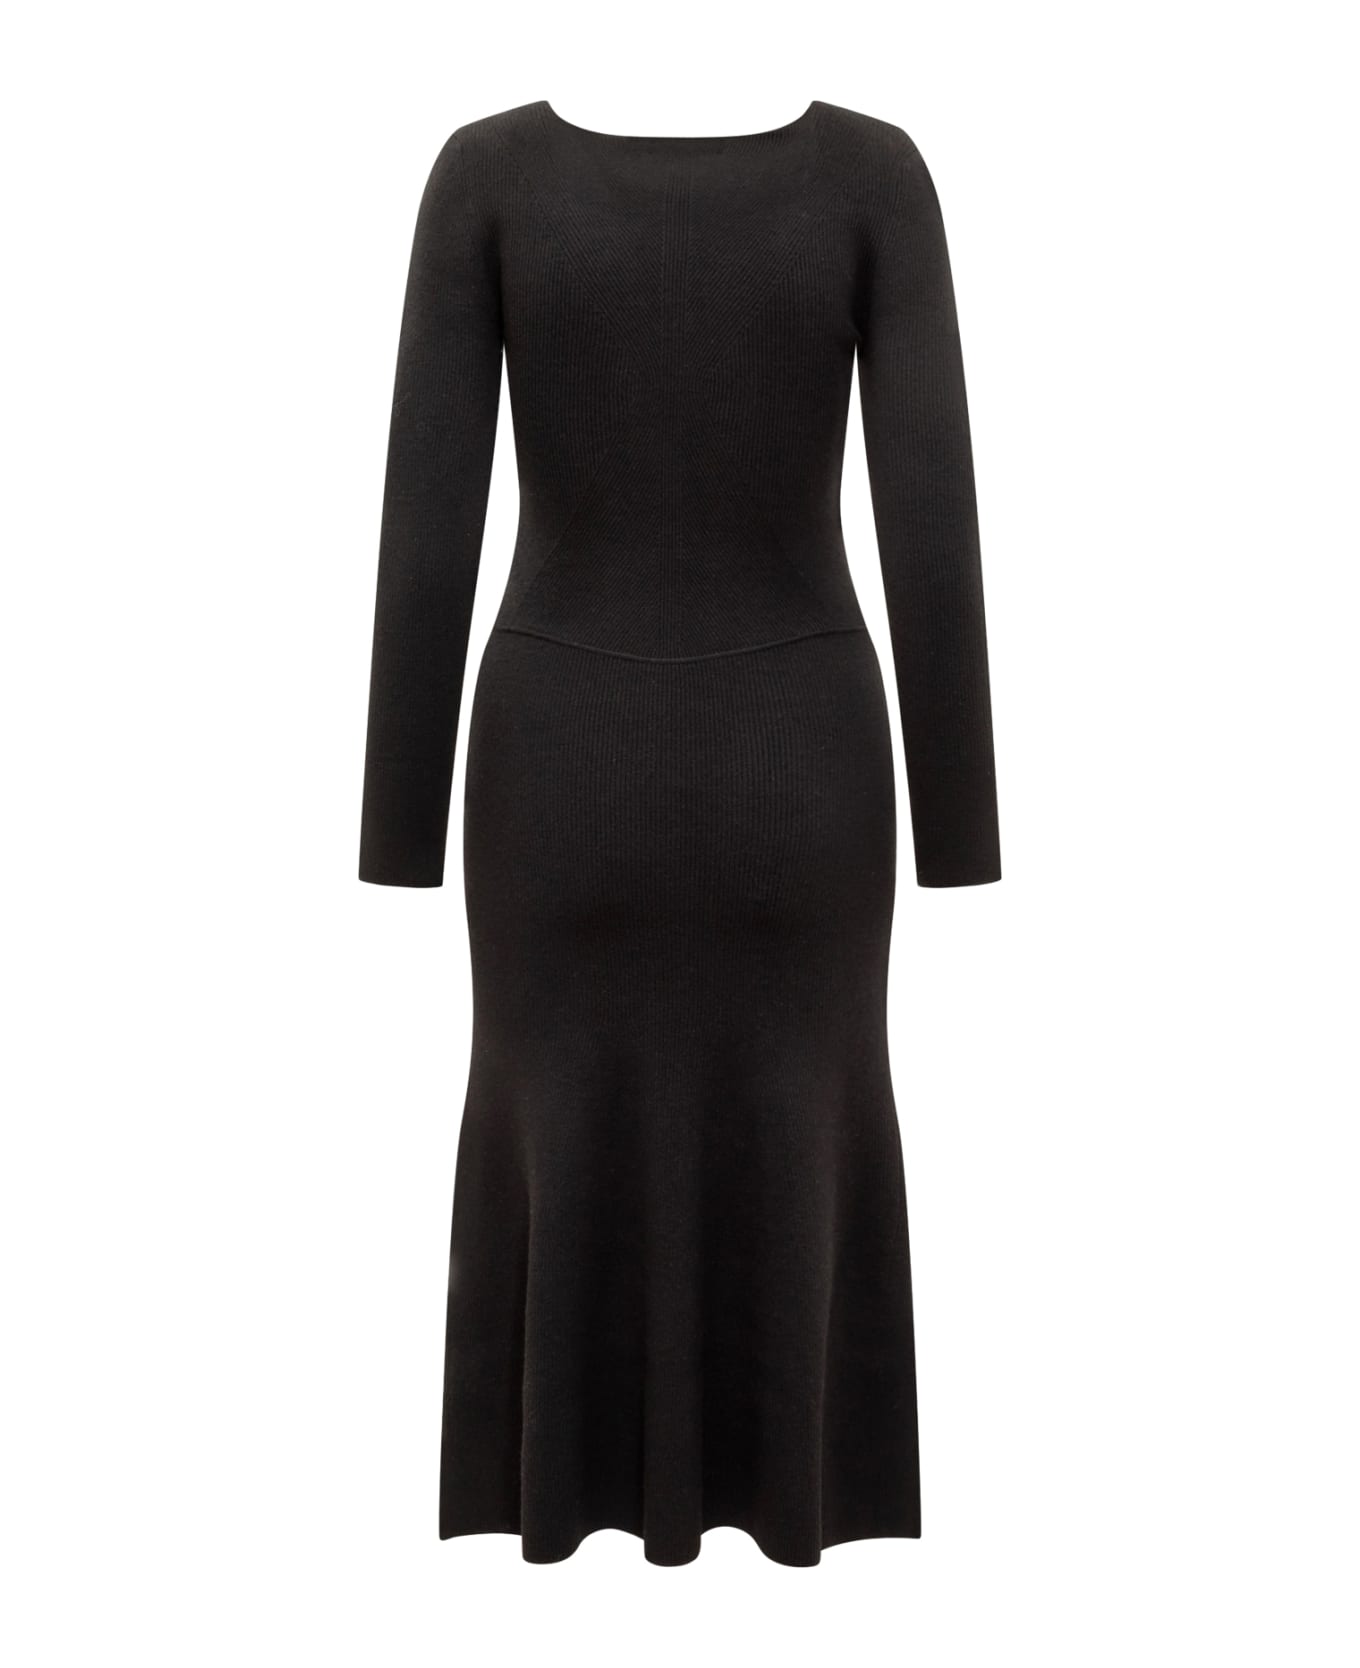 Victoria Beckham Circle Dress - BLACK